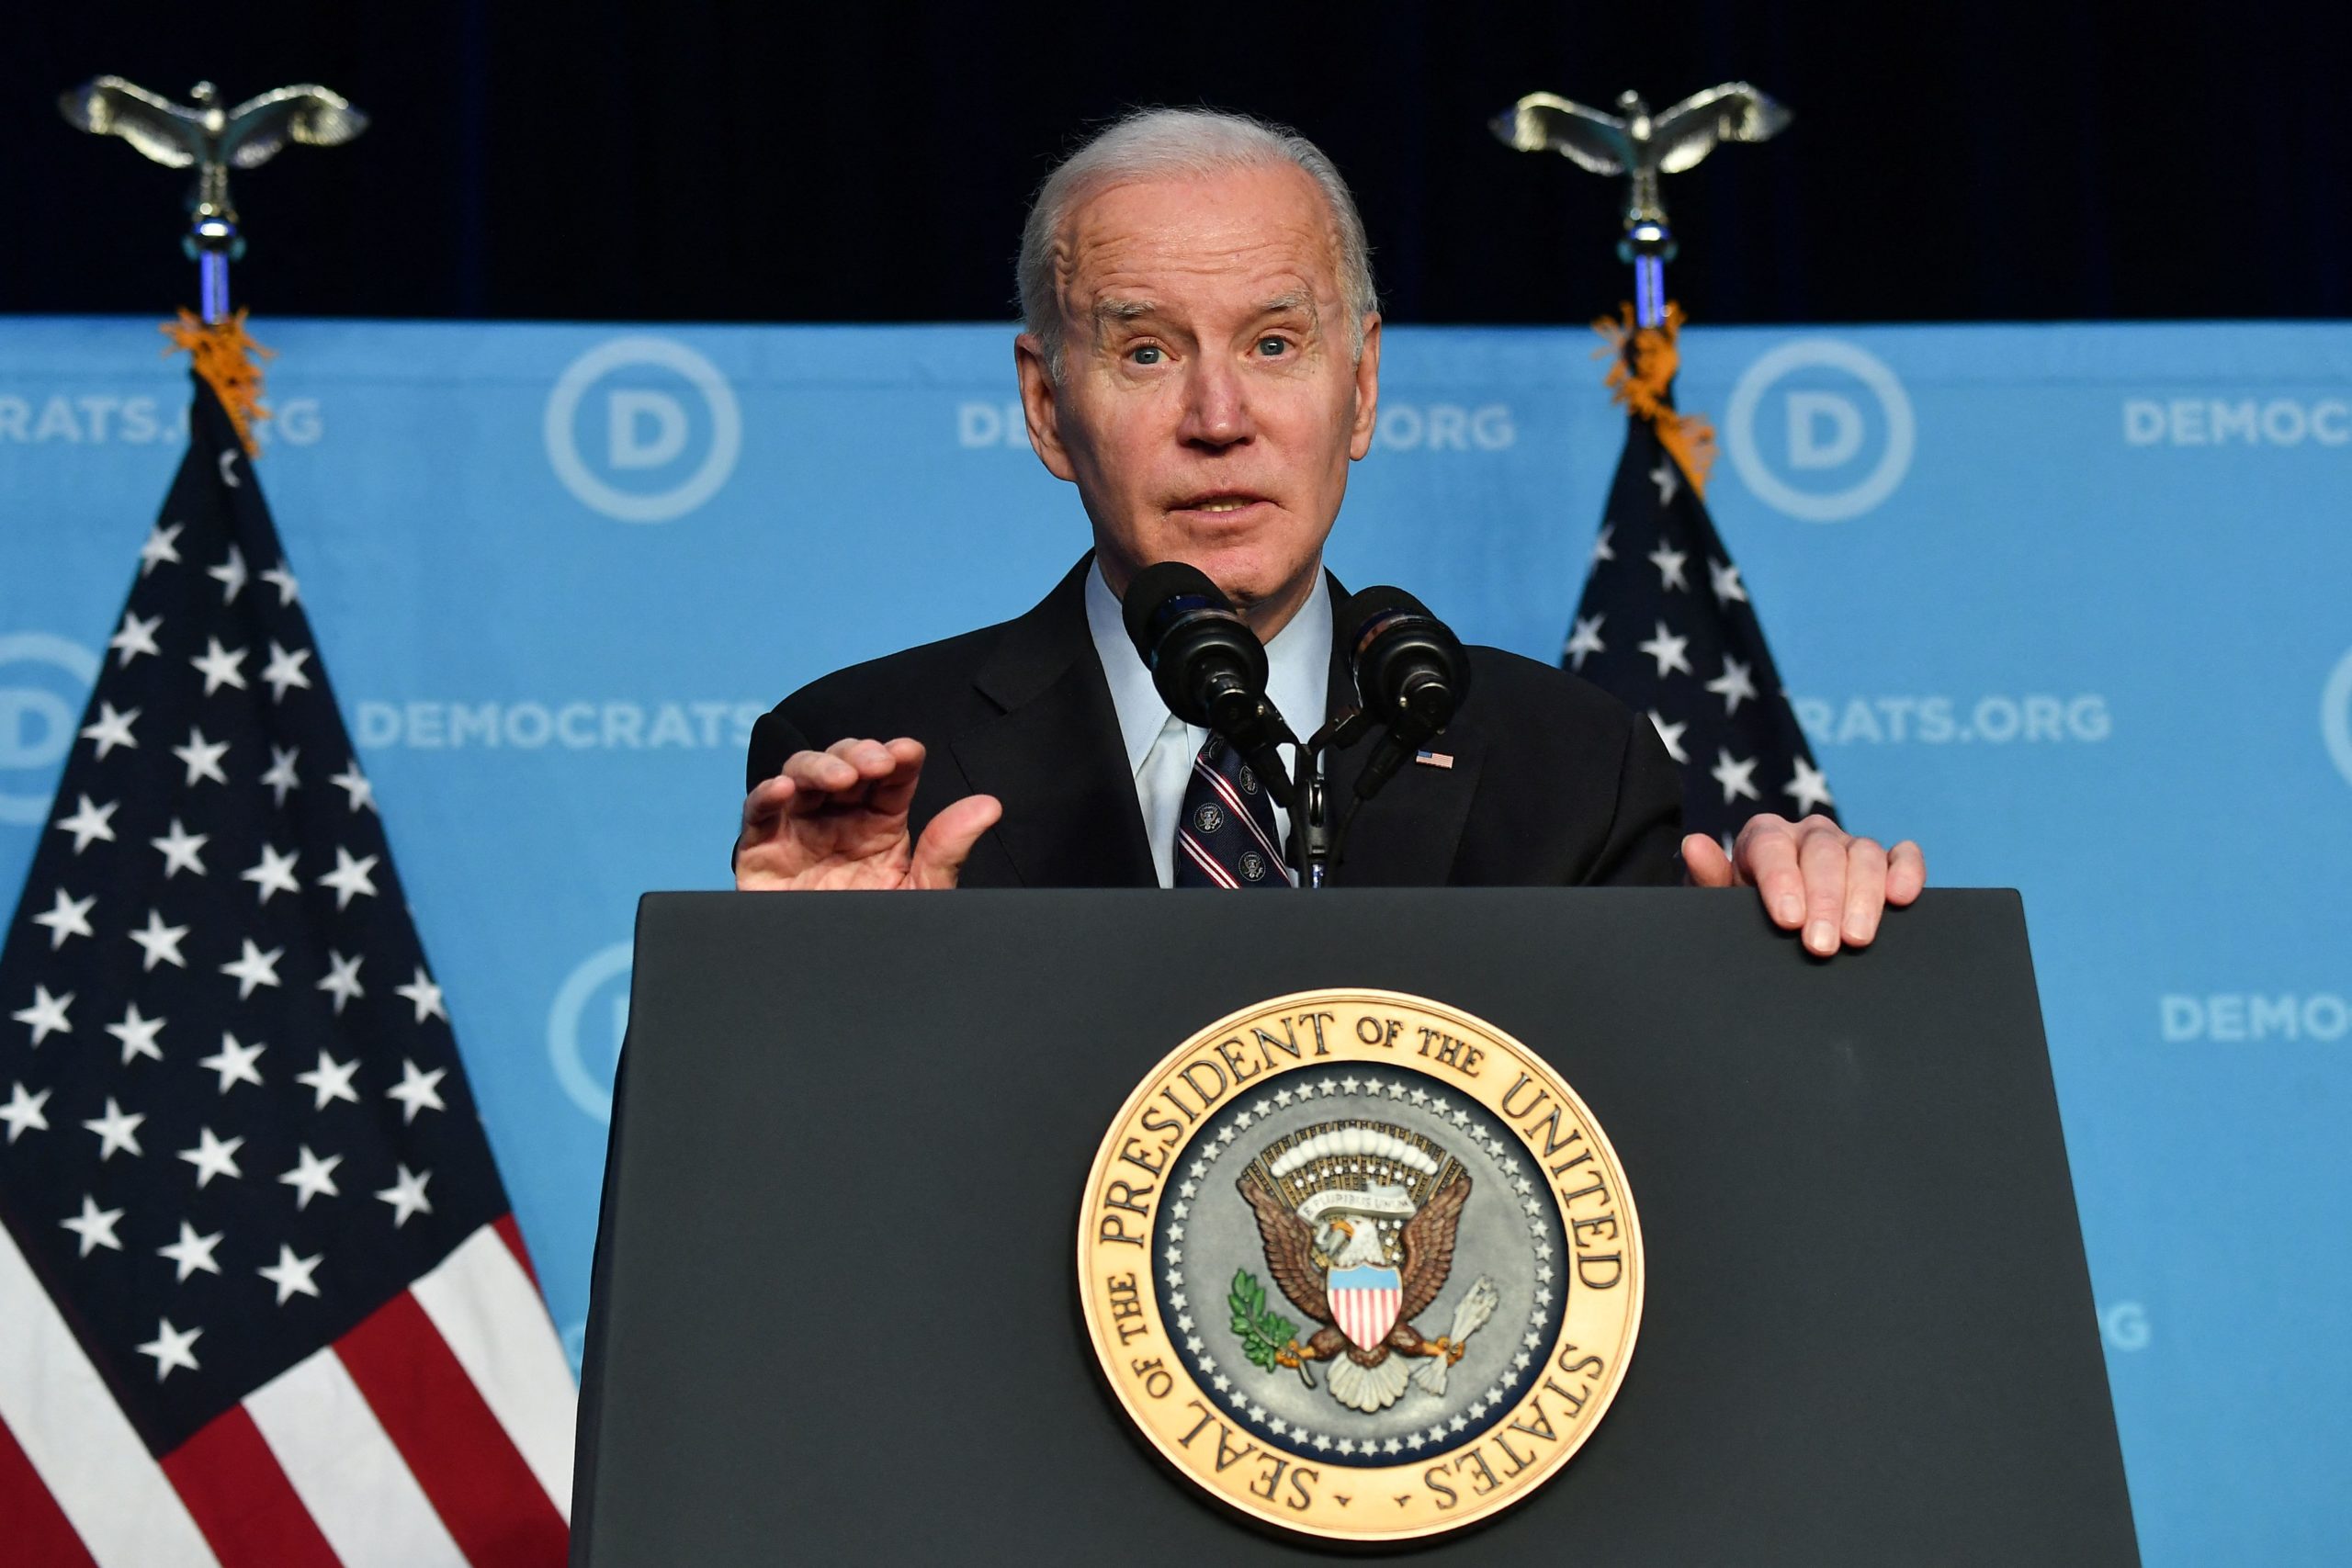 President Joe Biden speaks at the Democratic National Committees Winter Meeting on March 10 in Washington, D.C. (Nicholas Kamm/AFP via Getty Images)